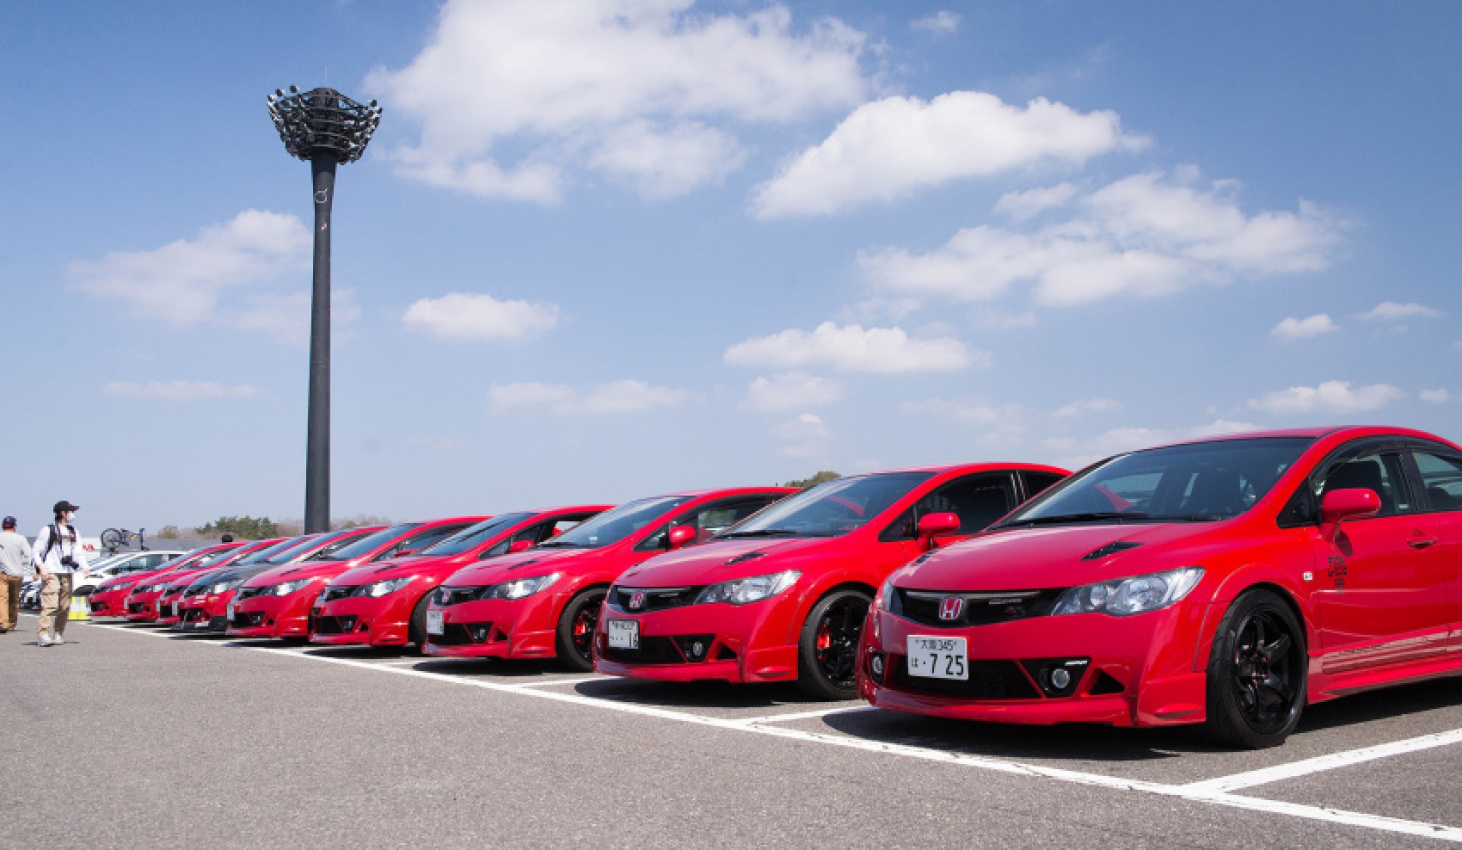 autos, cars, events, honda, honda civic, huge meetup in japan celebrates 25 years of the iconic honda civic type r